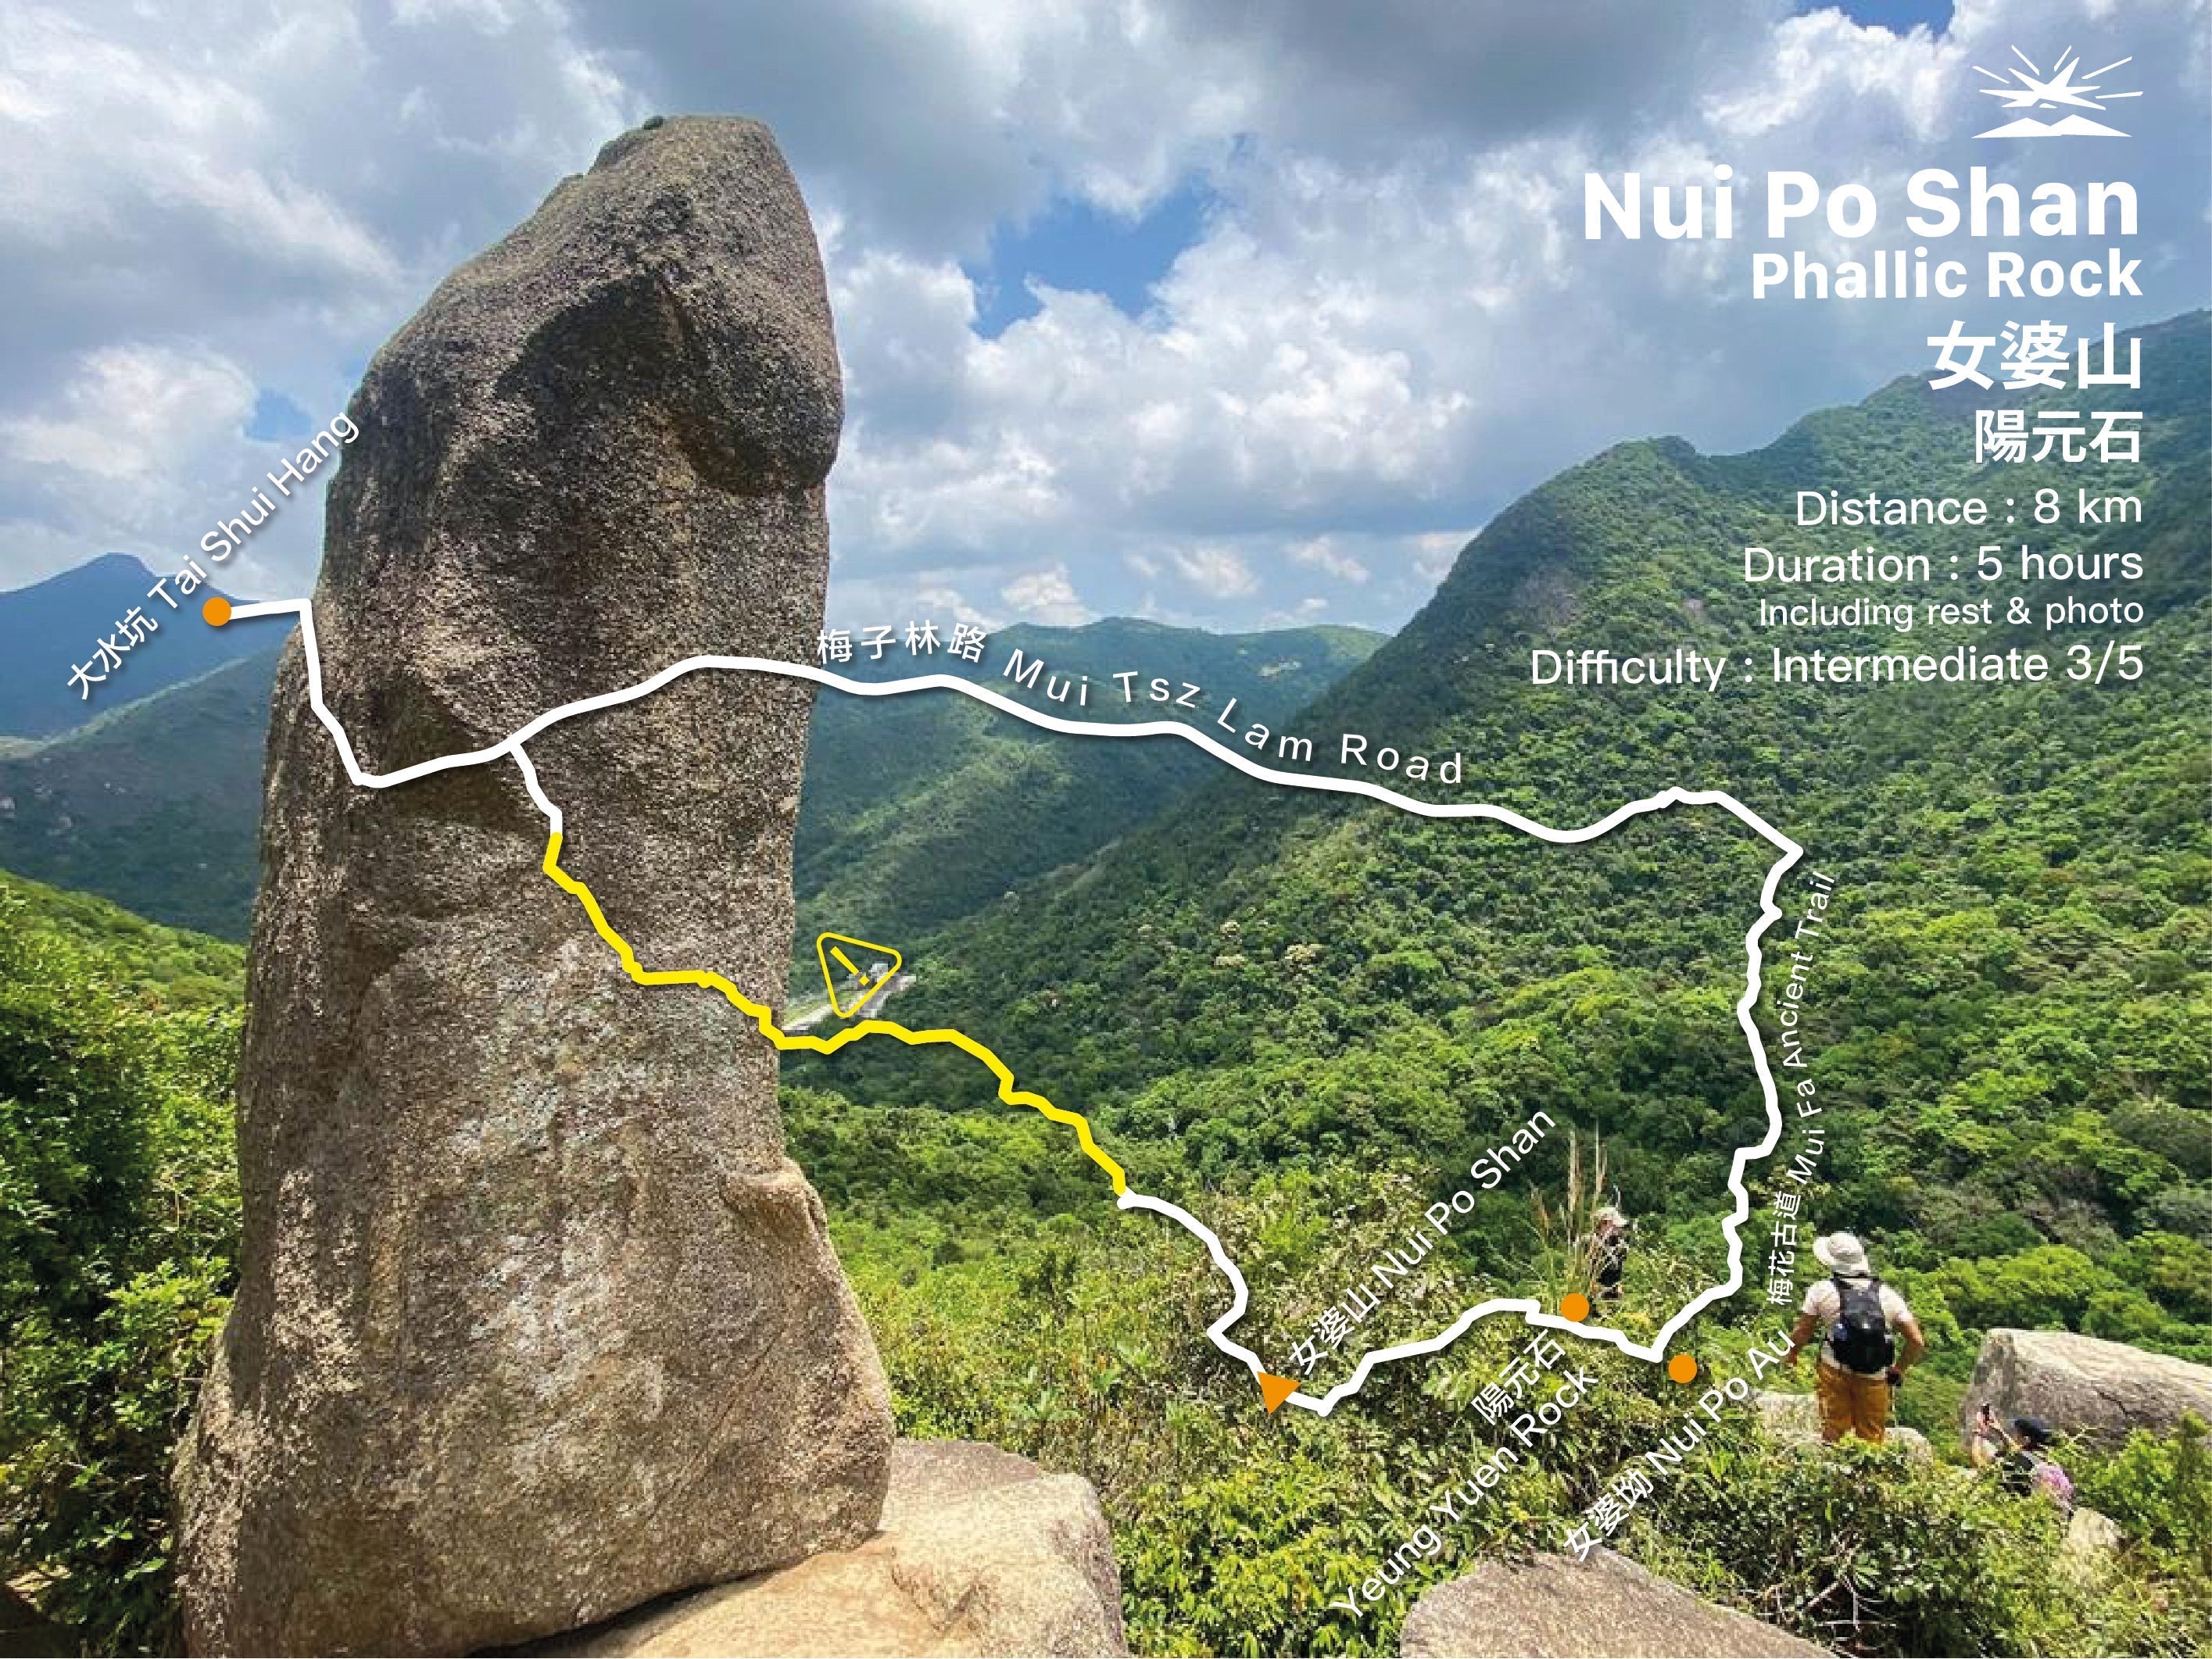 Nui Po Shan - Phallic Rock